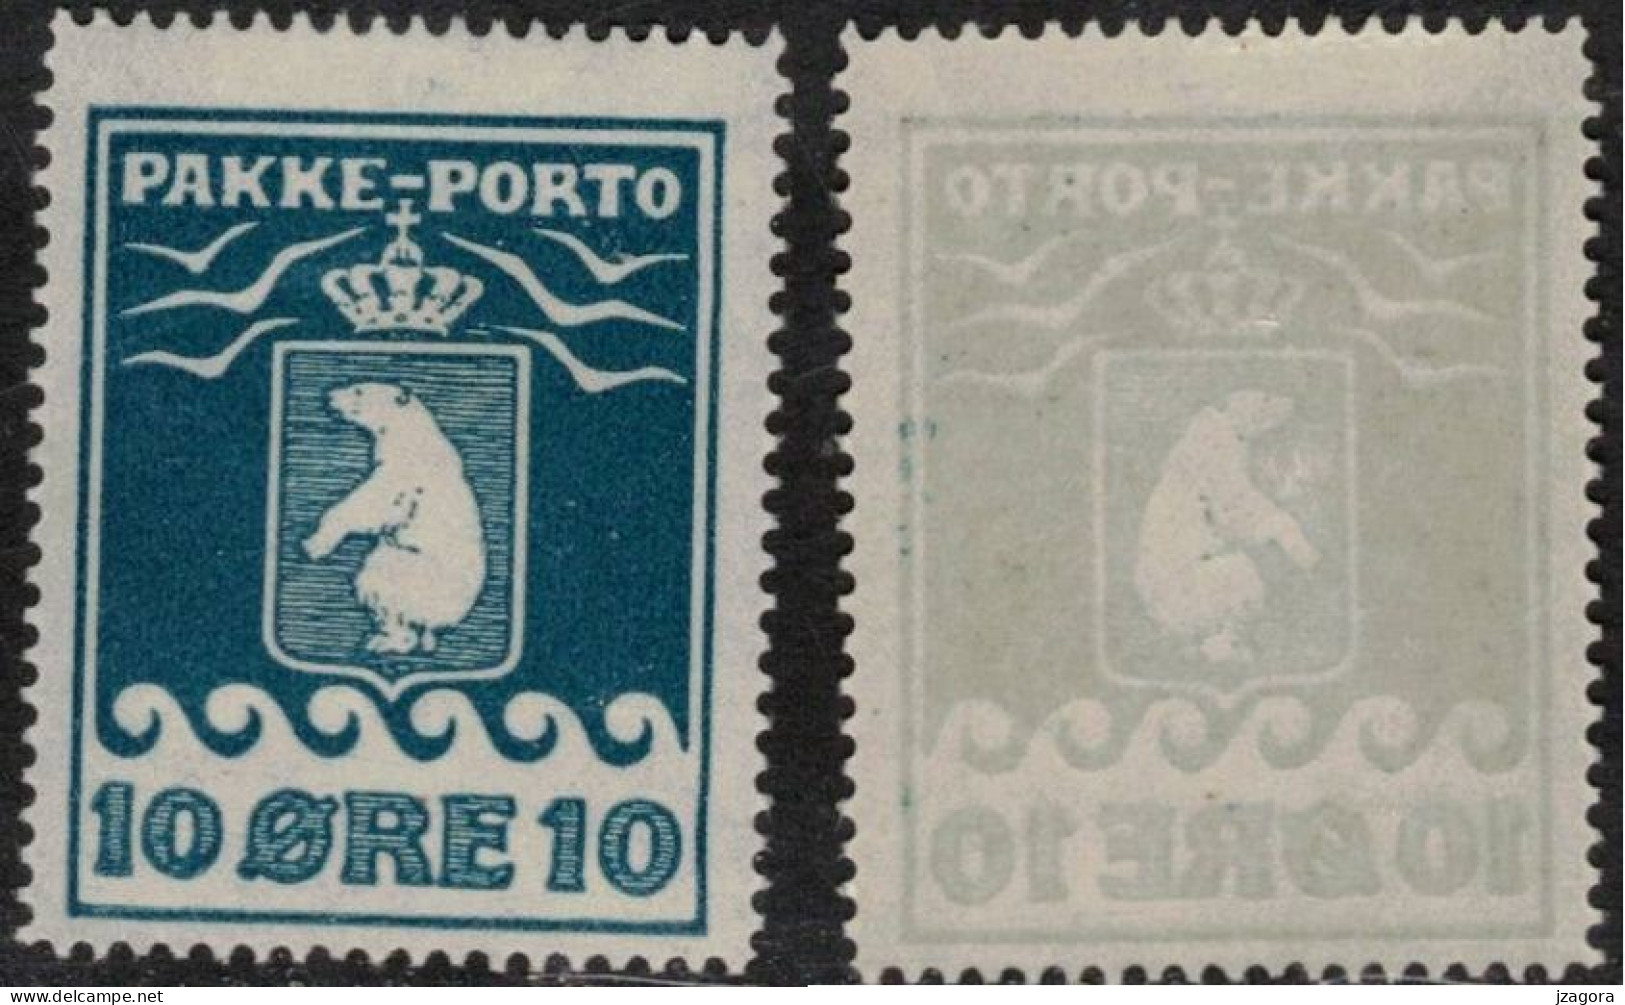 GRÖNLAND GROENLAND GREENLAND 1915 PAKKE PORTO PARCEL POST 10 ÖRE Perf 11 ½ MI 7A FACIT P7 II - MINT NEVER HINGED (**) - Paketmarken